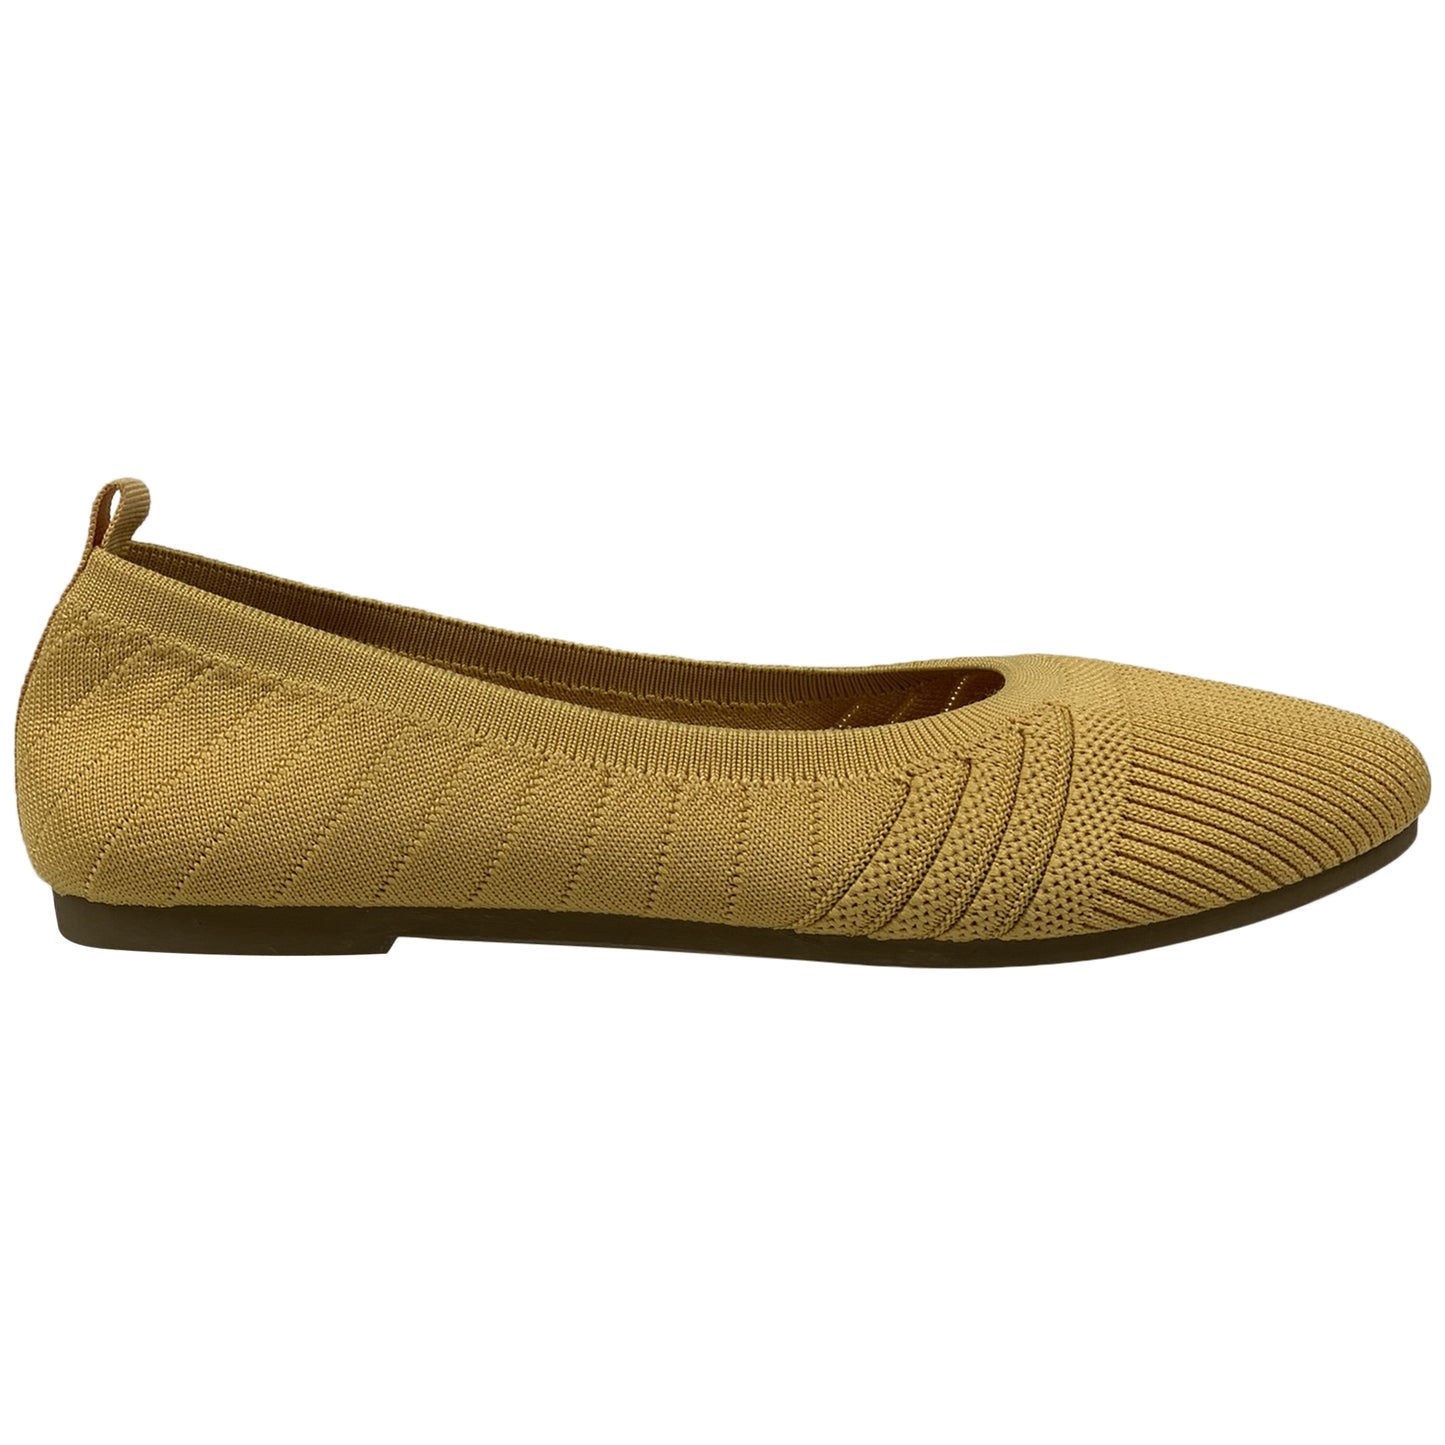 SOBEYO Sweater Round Toe Ballet Flats Soft Foldable Sole Yellow